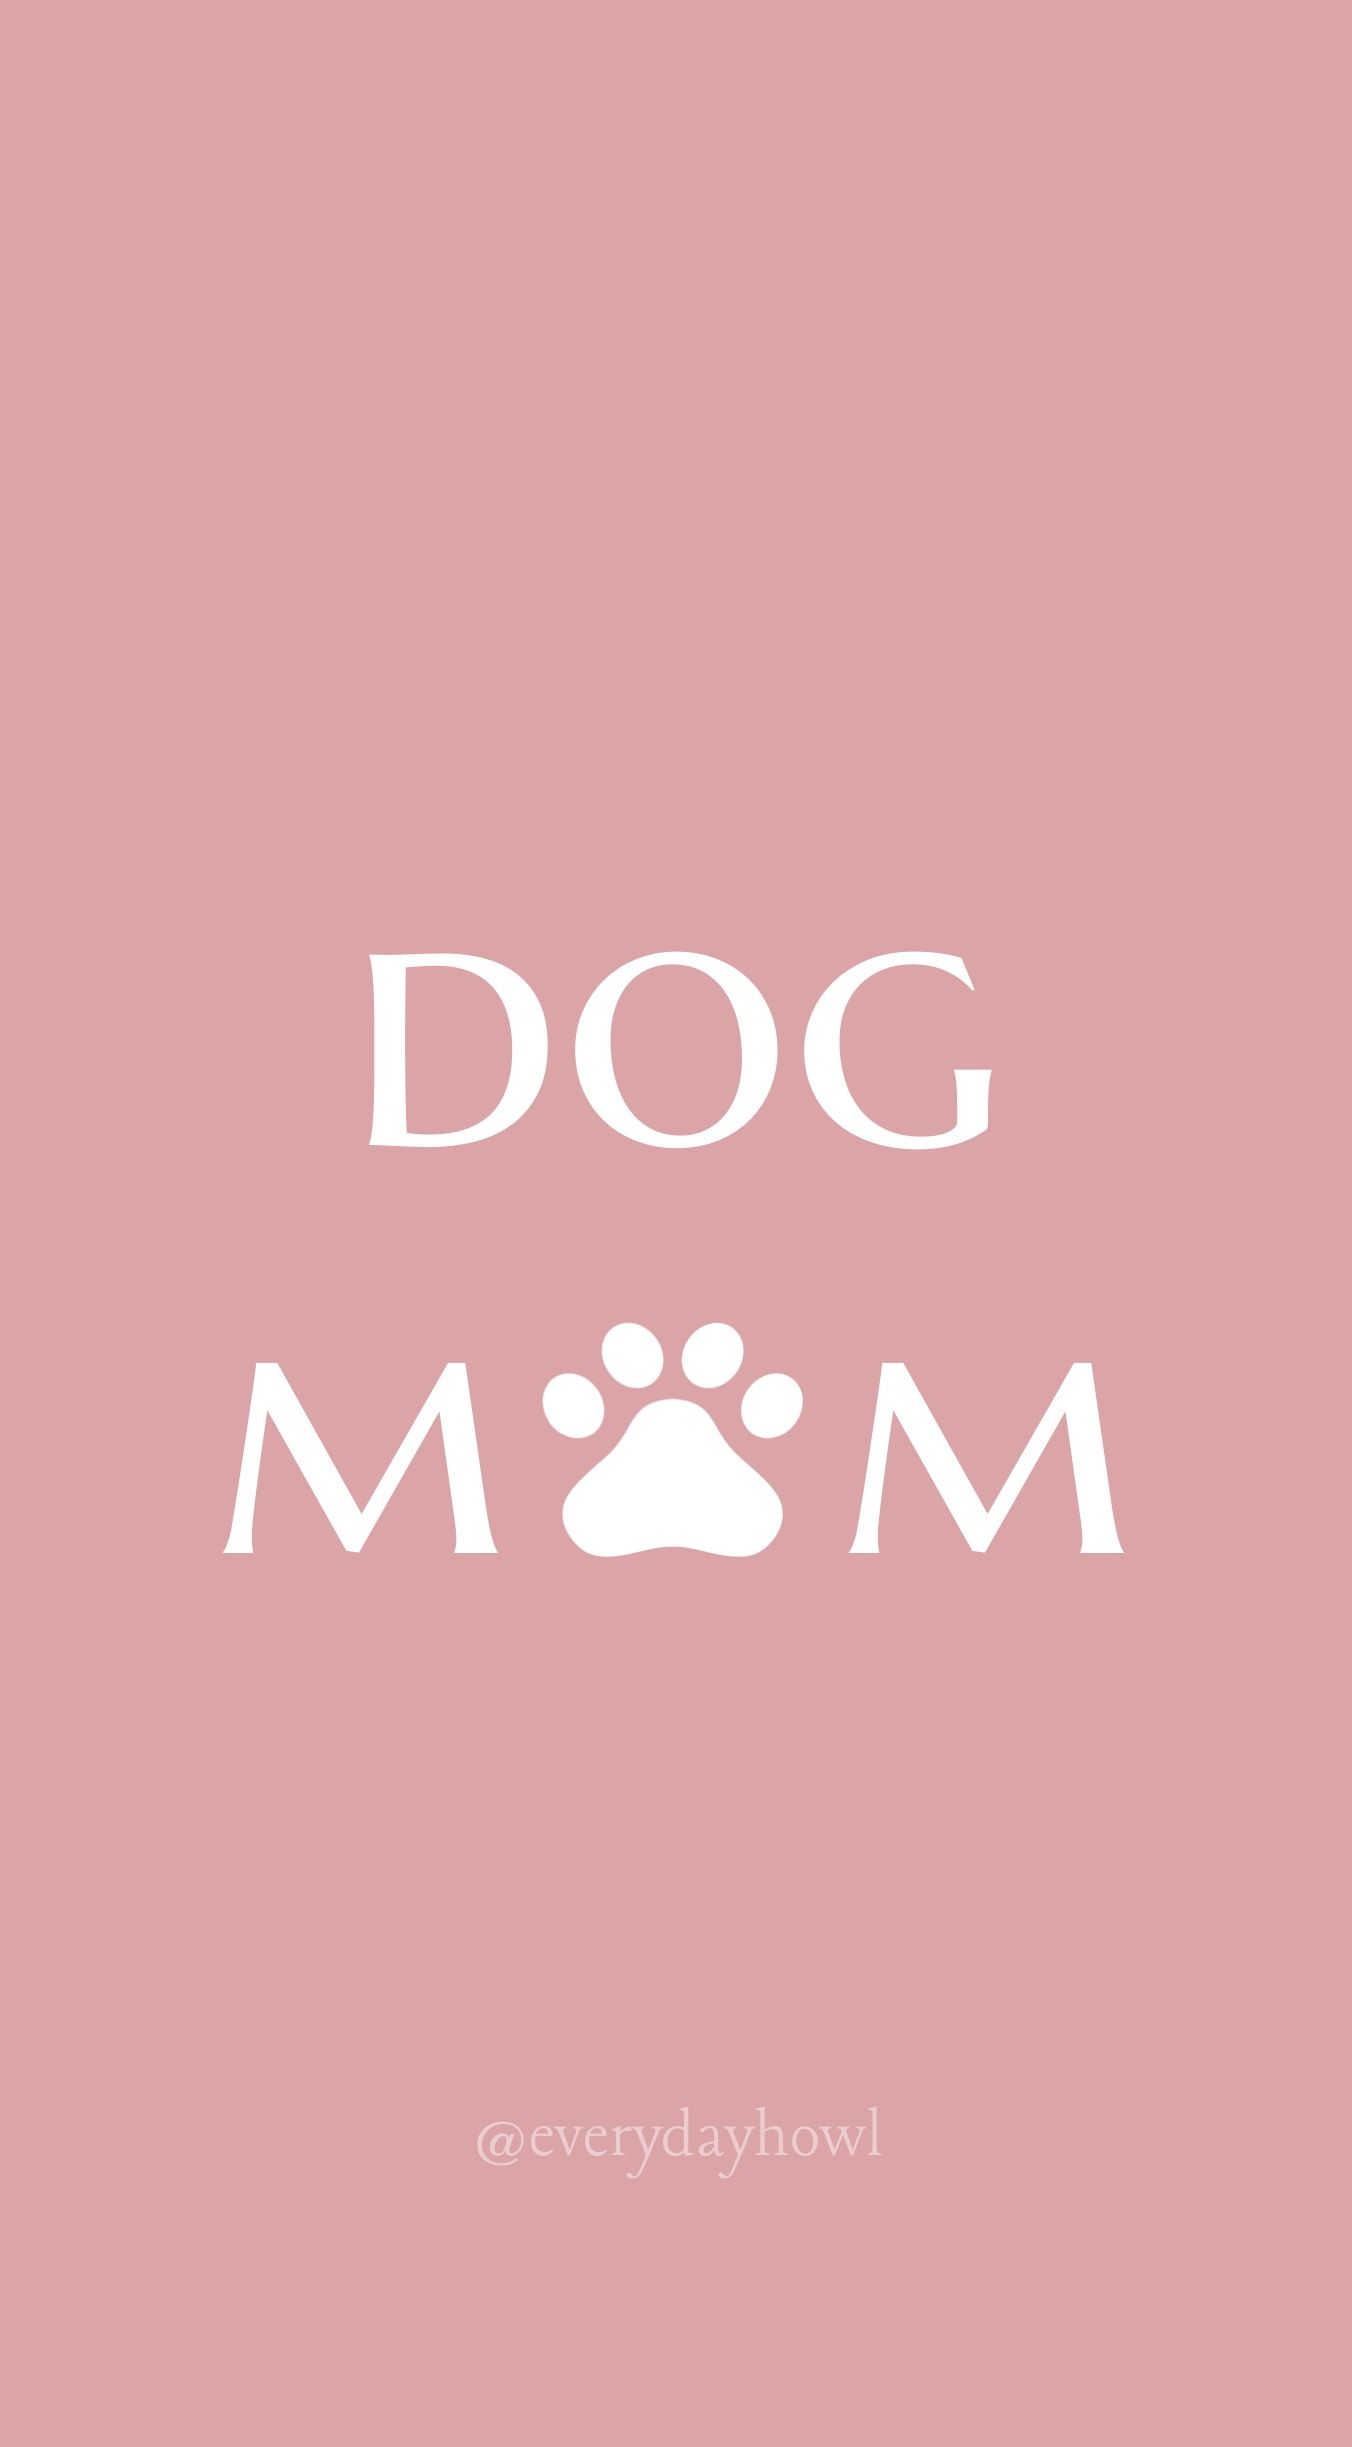 Dog lover quotes, Dog mom, Dog quotes.com